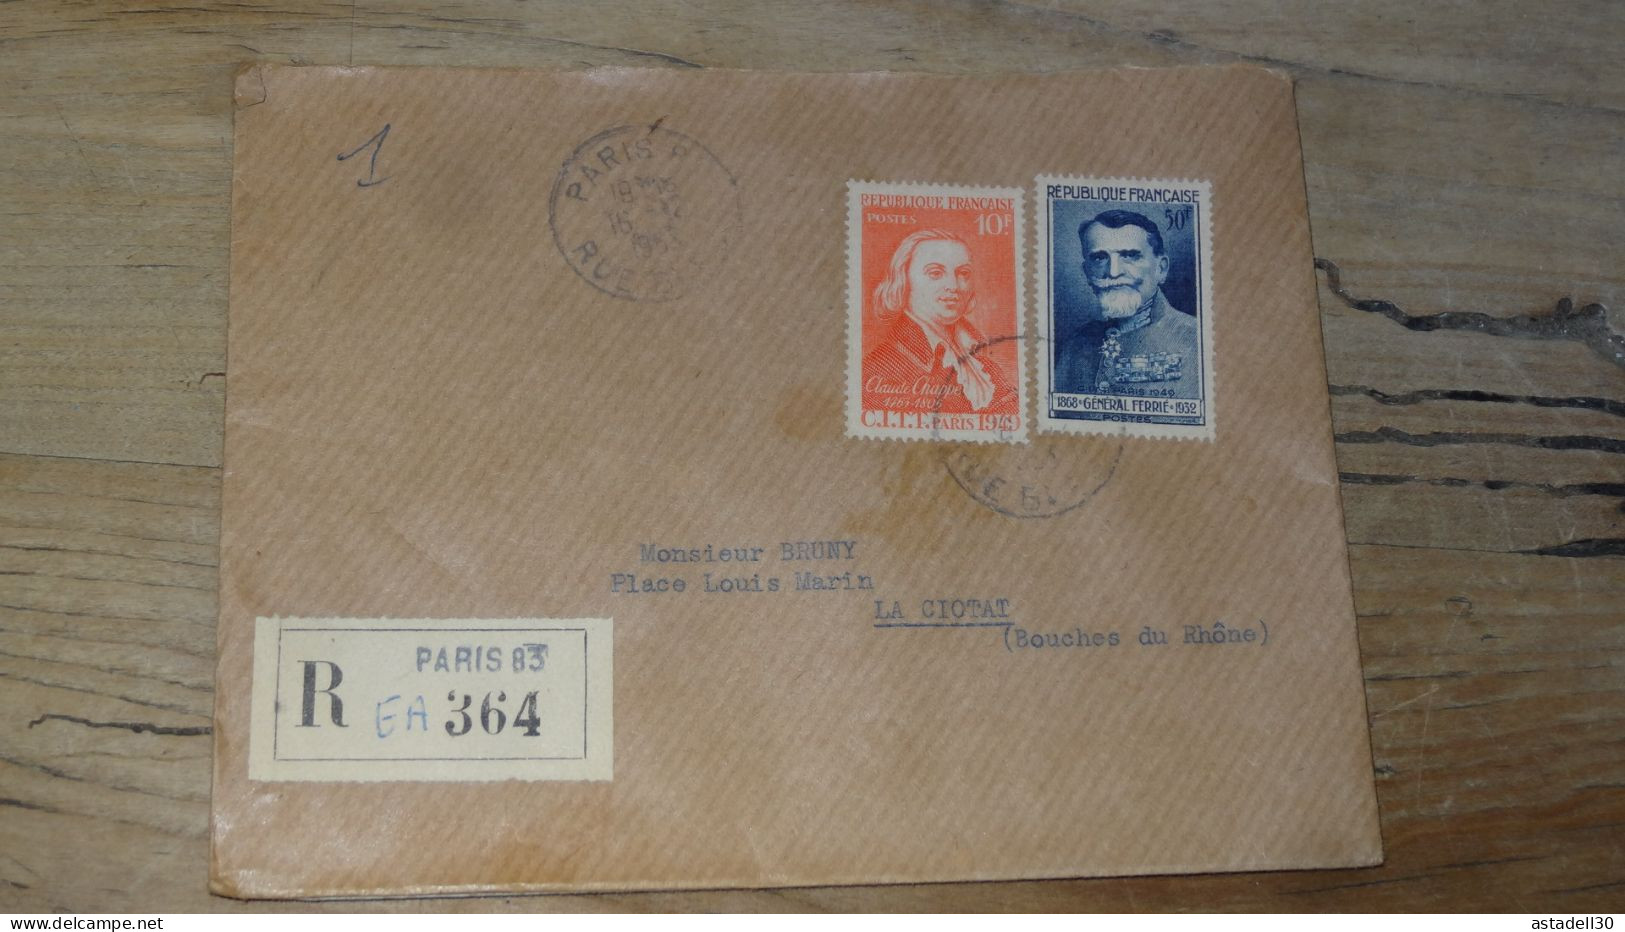 Enveloppe Recommandée PARIS Pour LA CIOTAT - 1953  ............BOITE1.......... 479 - 1921-1960: Periodo Moderno